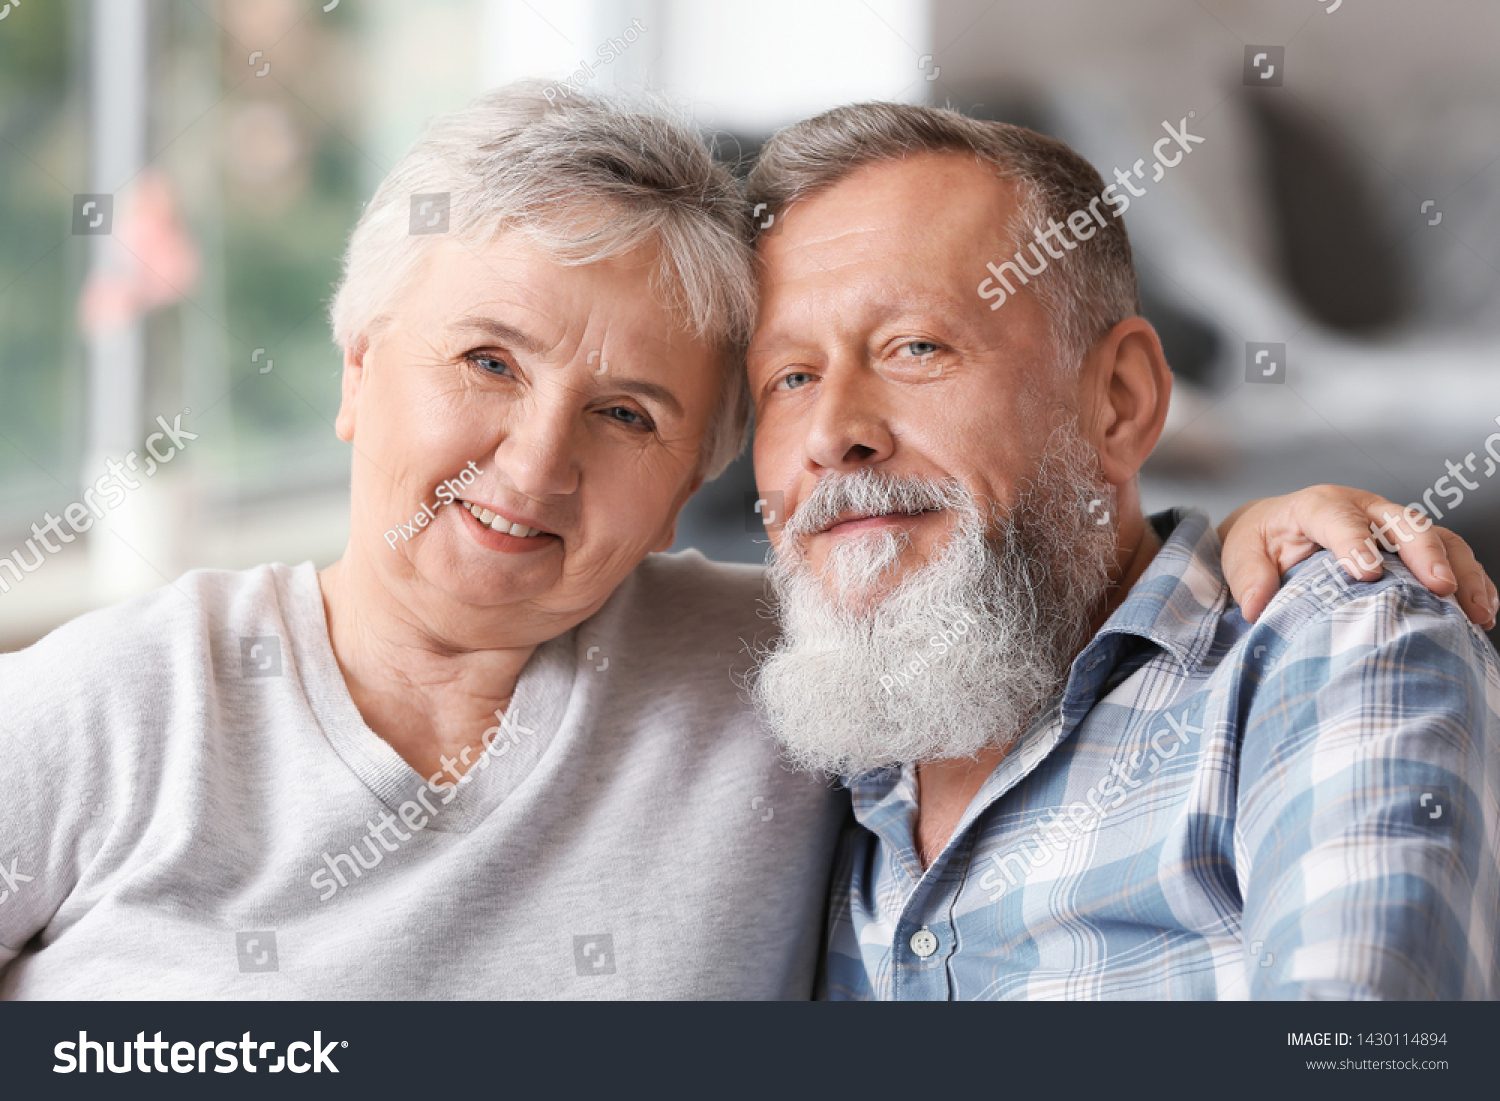 Portrait of elderly couple in nursing home #1430114894